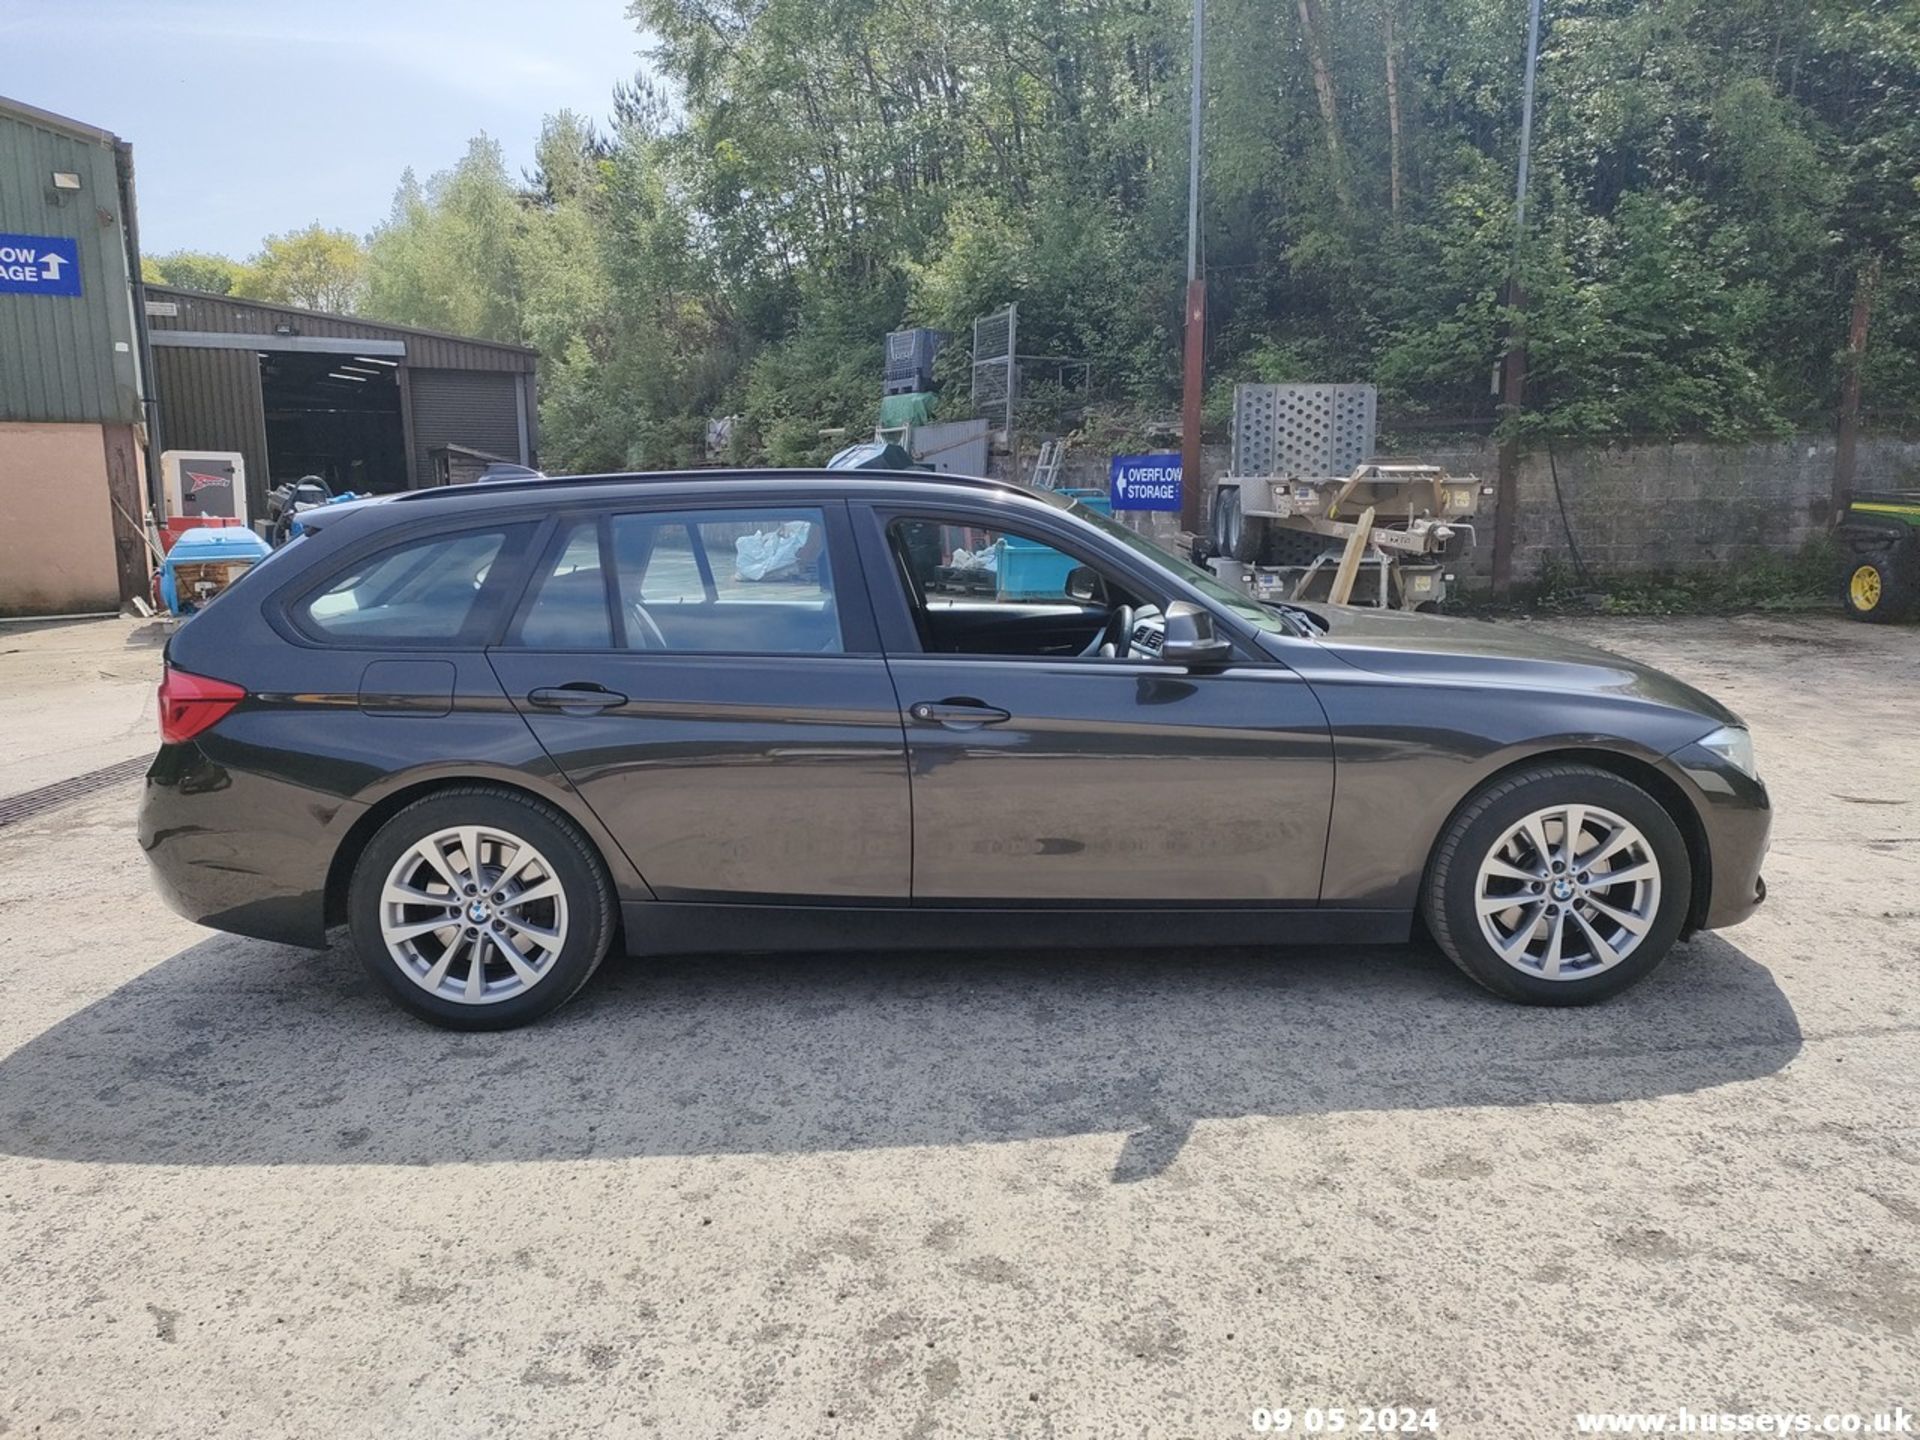 18/18 BMW 330D XDRIVE AC AUTO - 2993cc 5dr Estate (Brown) - Image 47 of 67